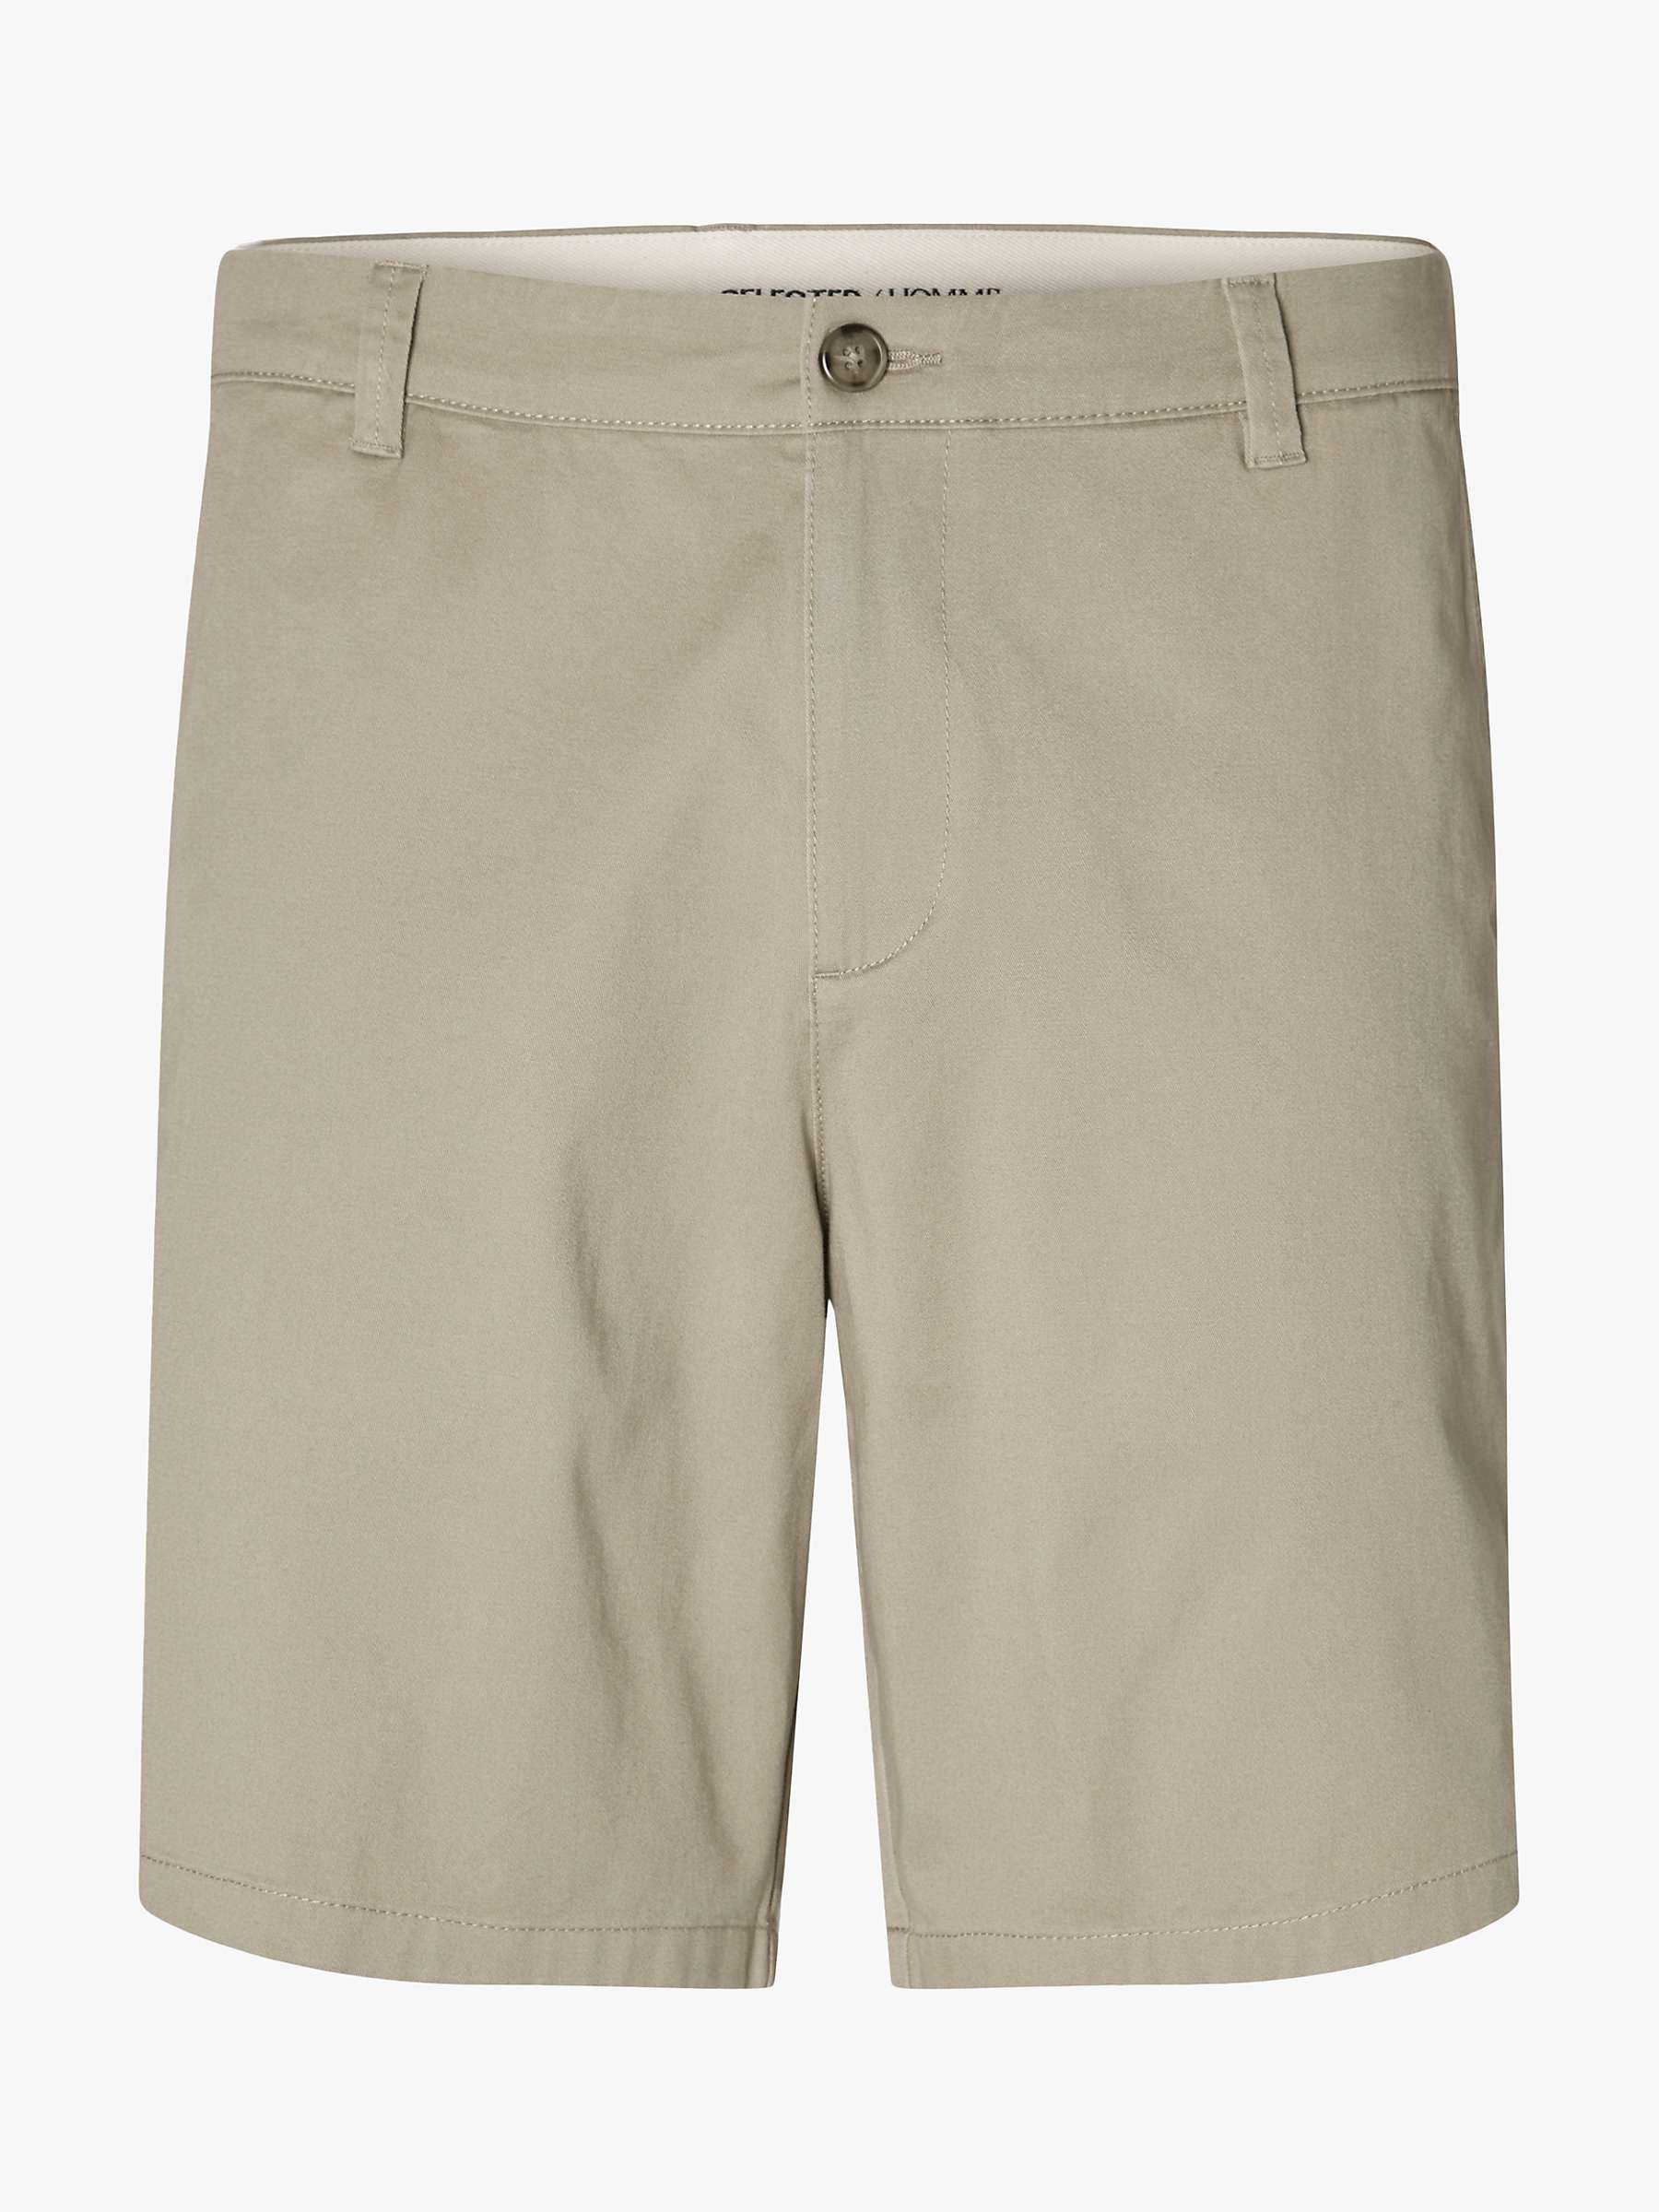 Buy SELECTED HOMME Bill Flex Shorts, Grey Online at johnlewis.com